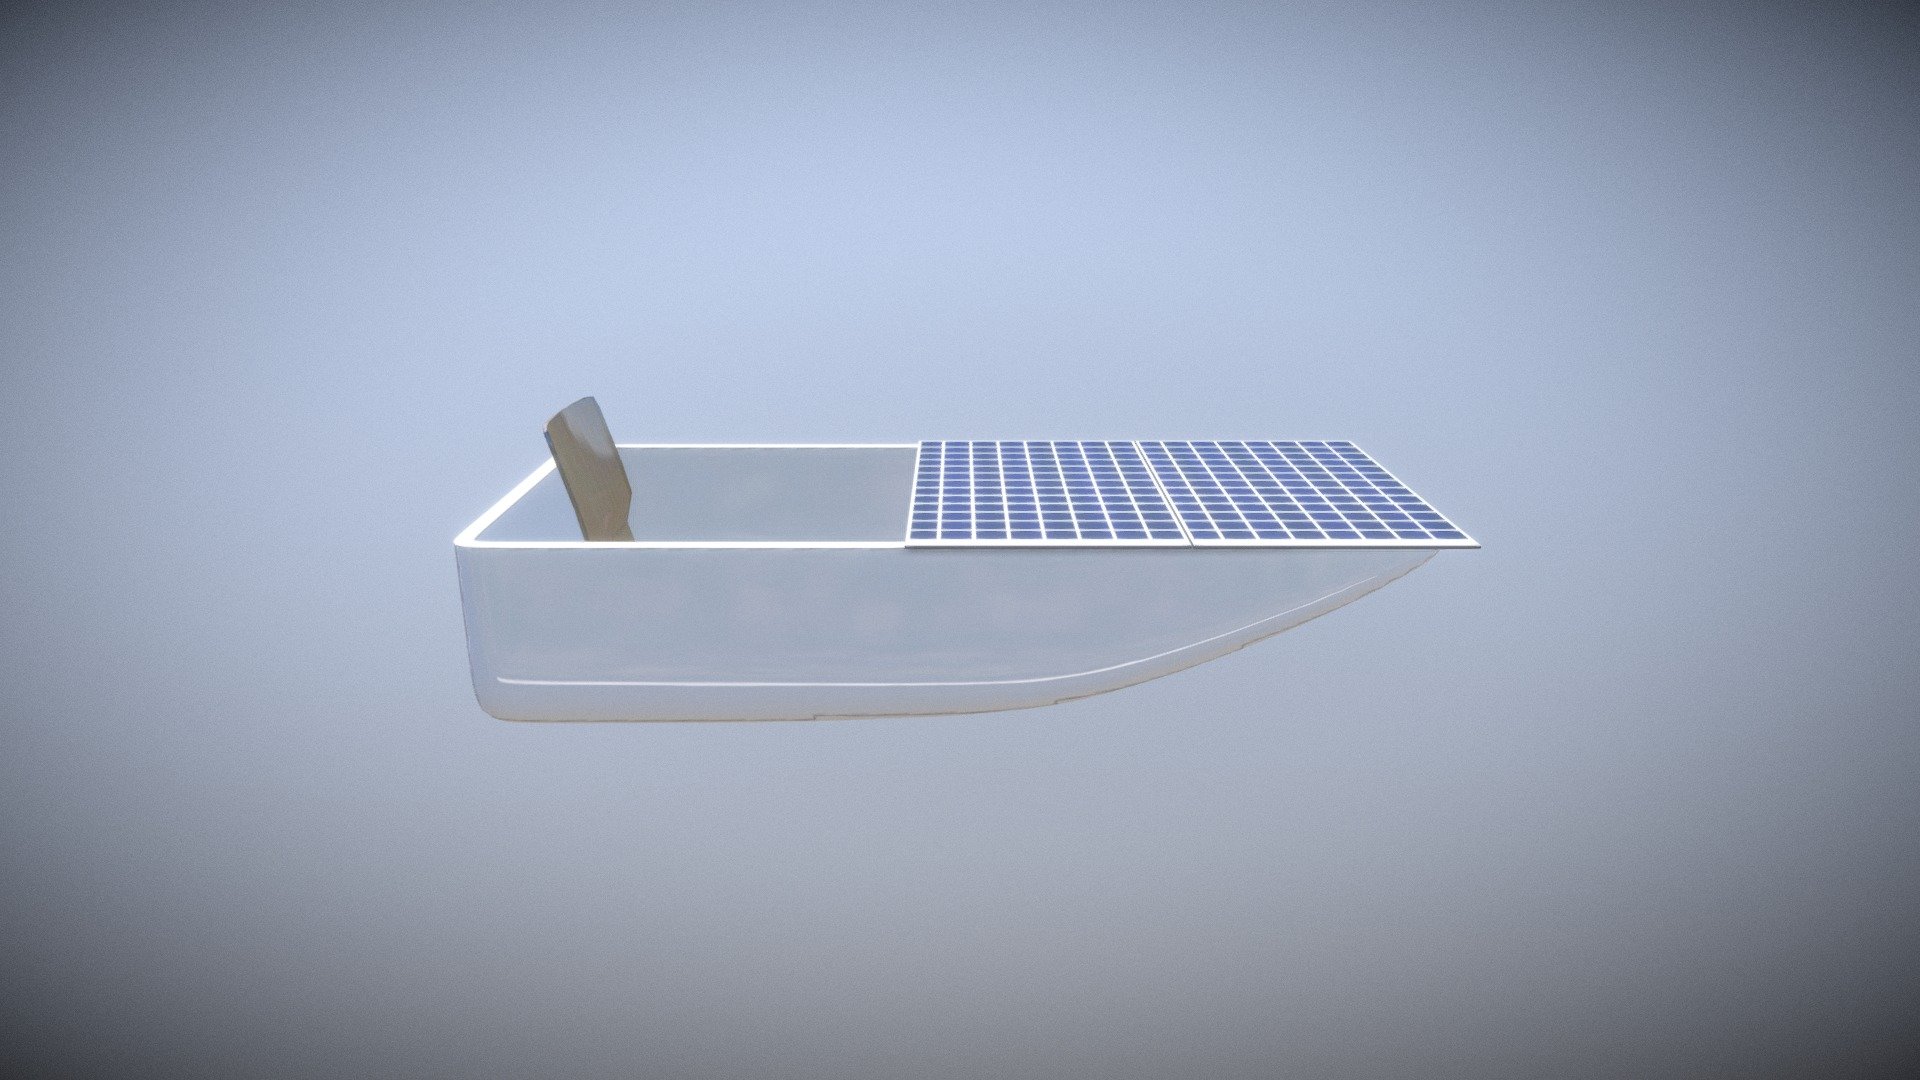 Simple Boat